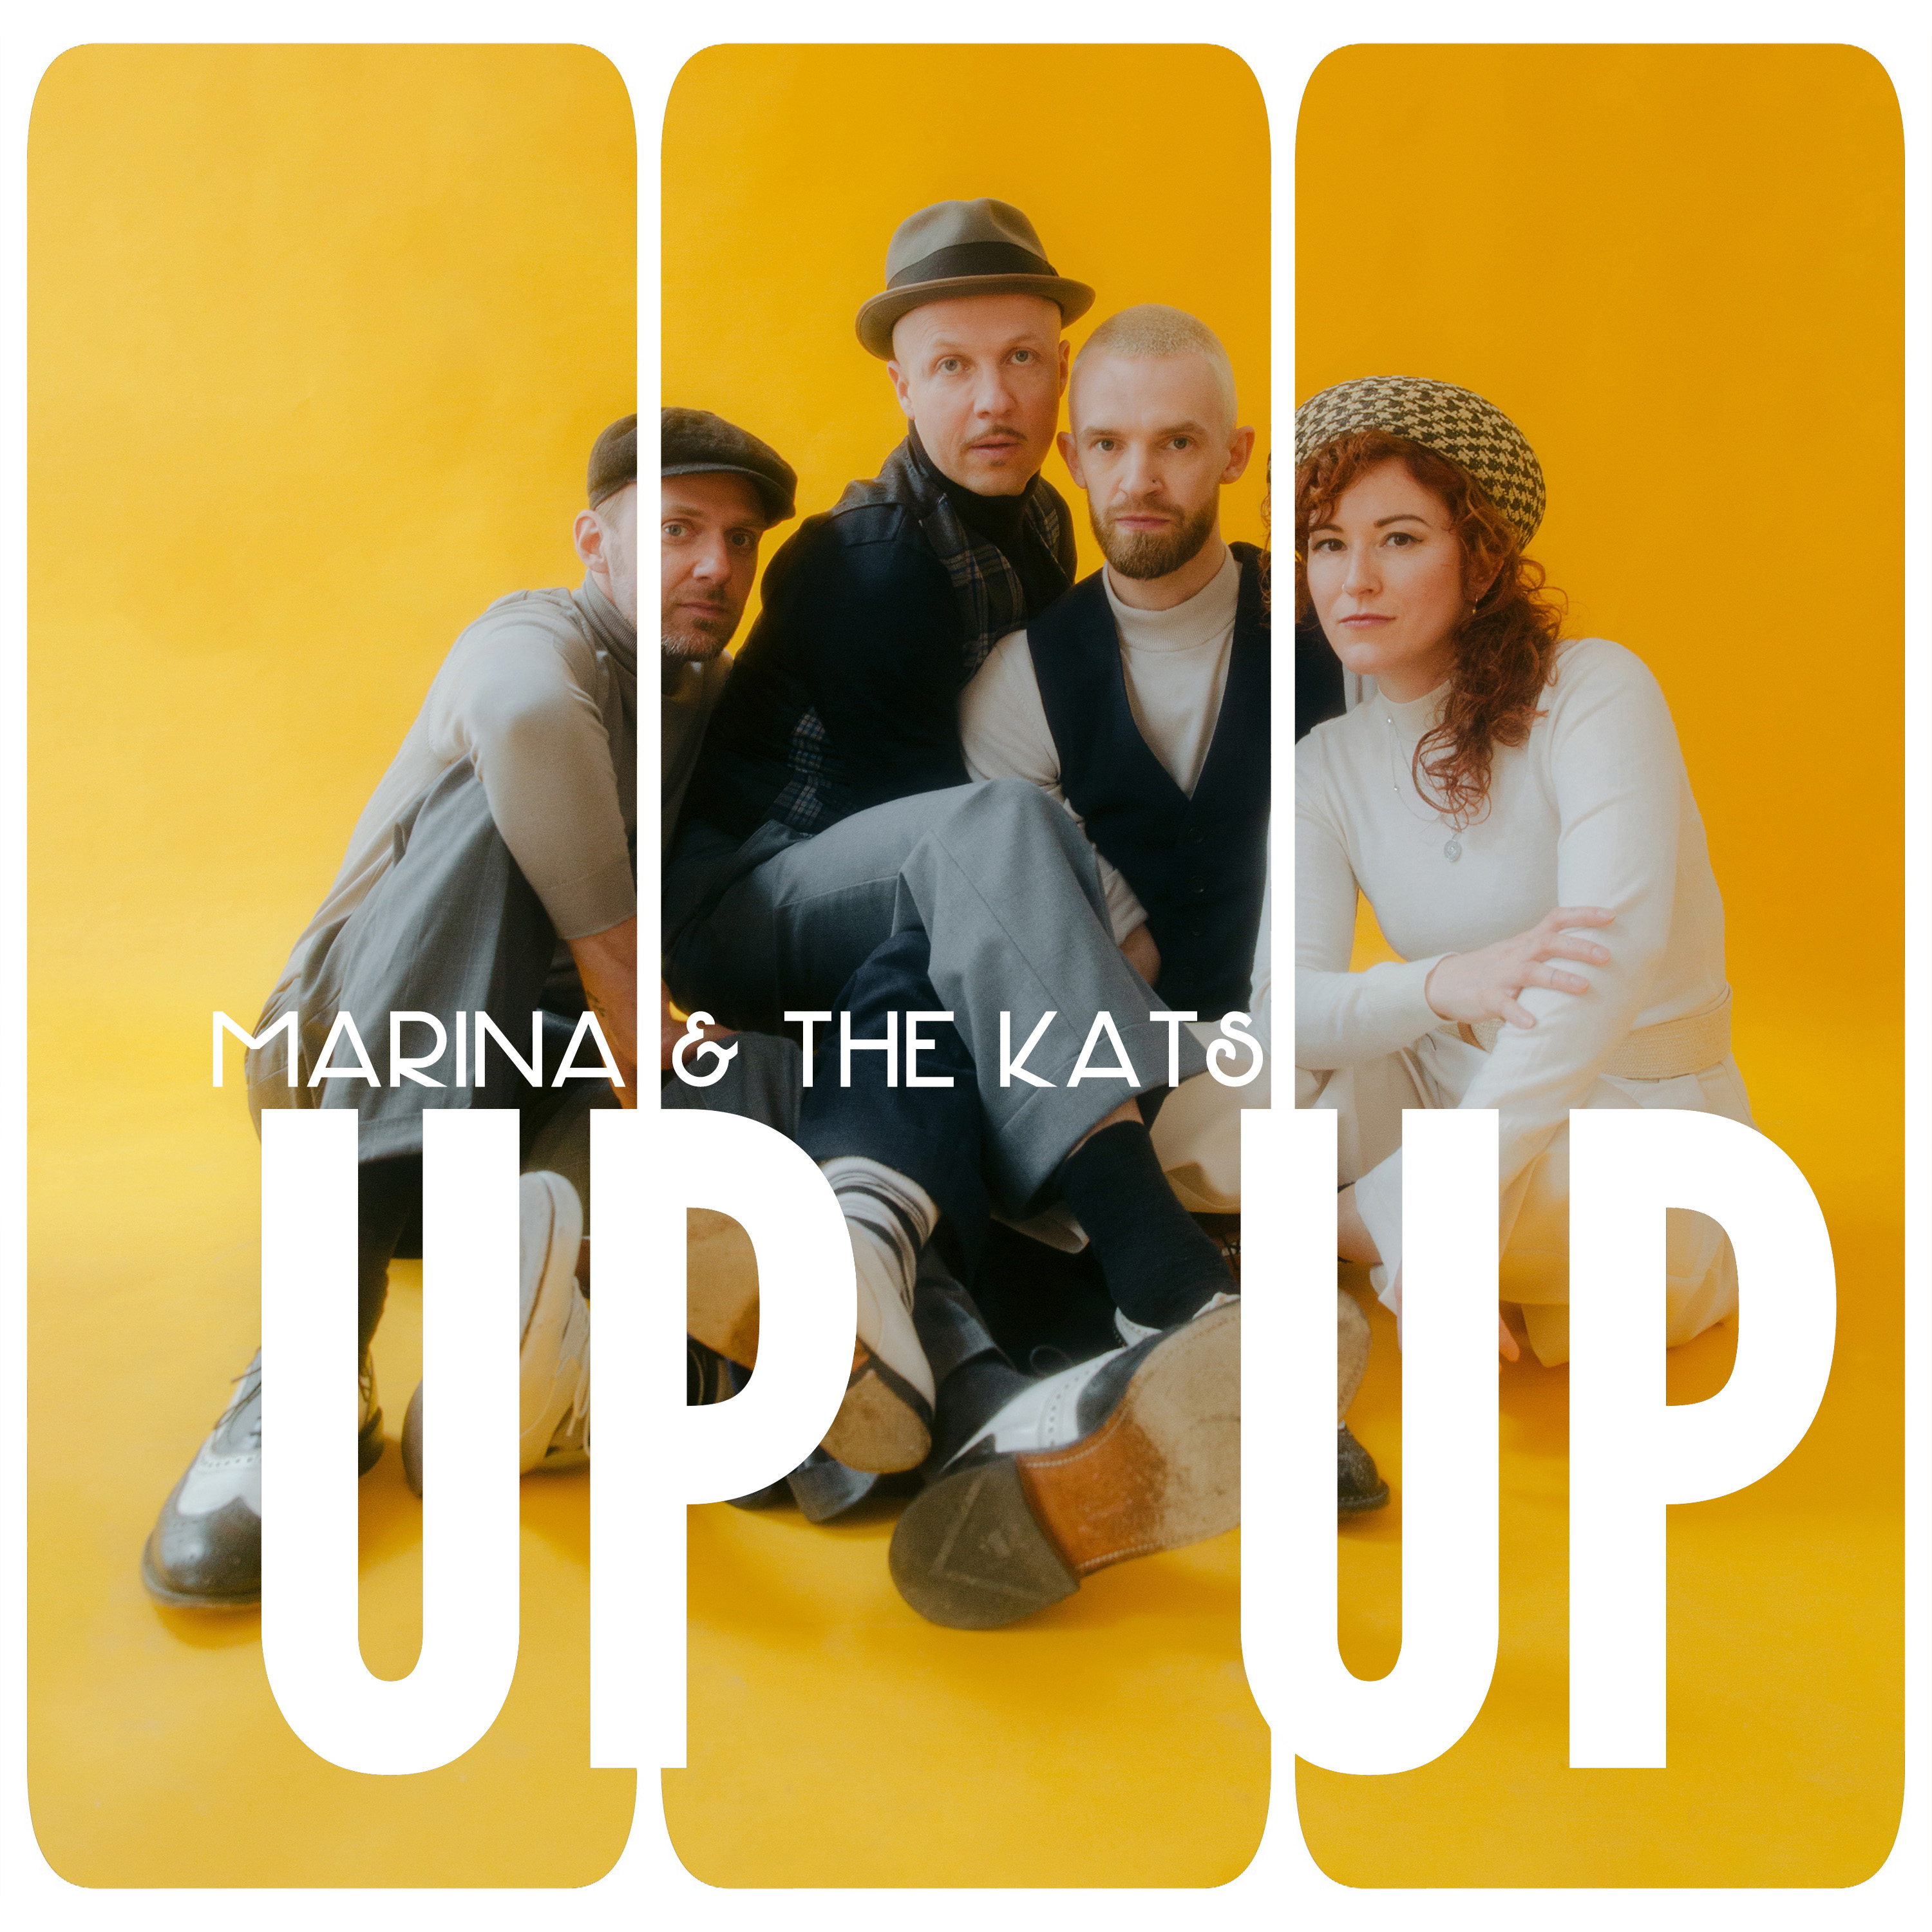 Marina & The Kats – “Up, Up”